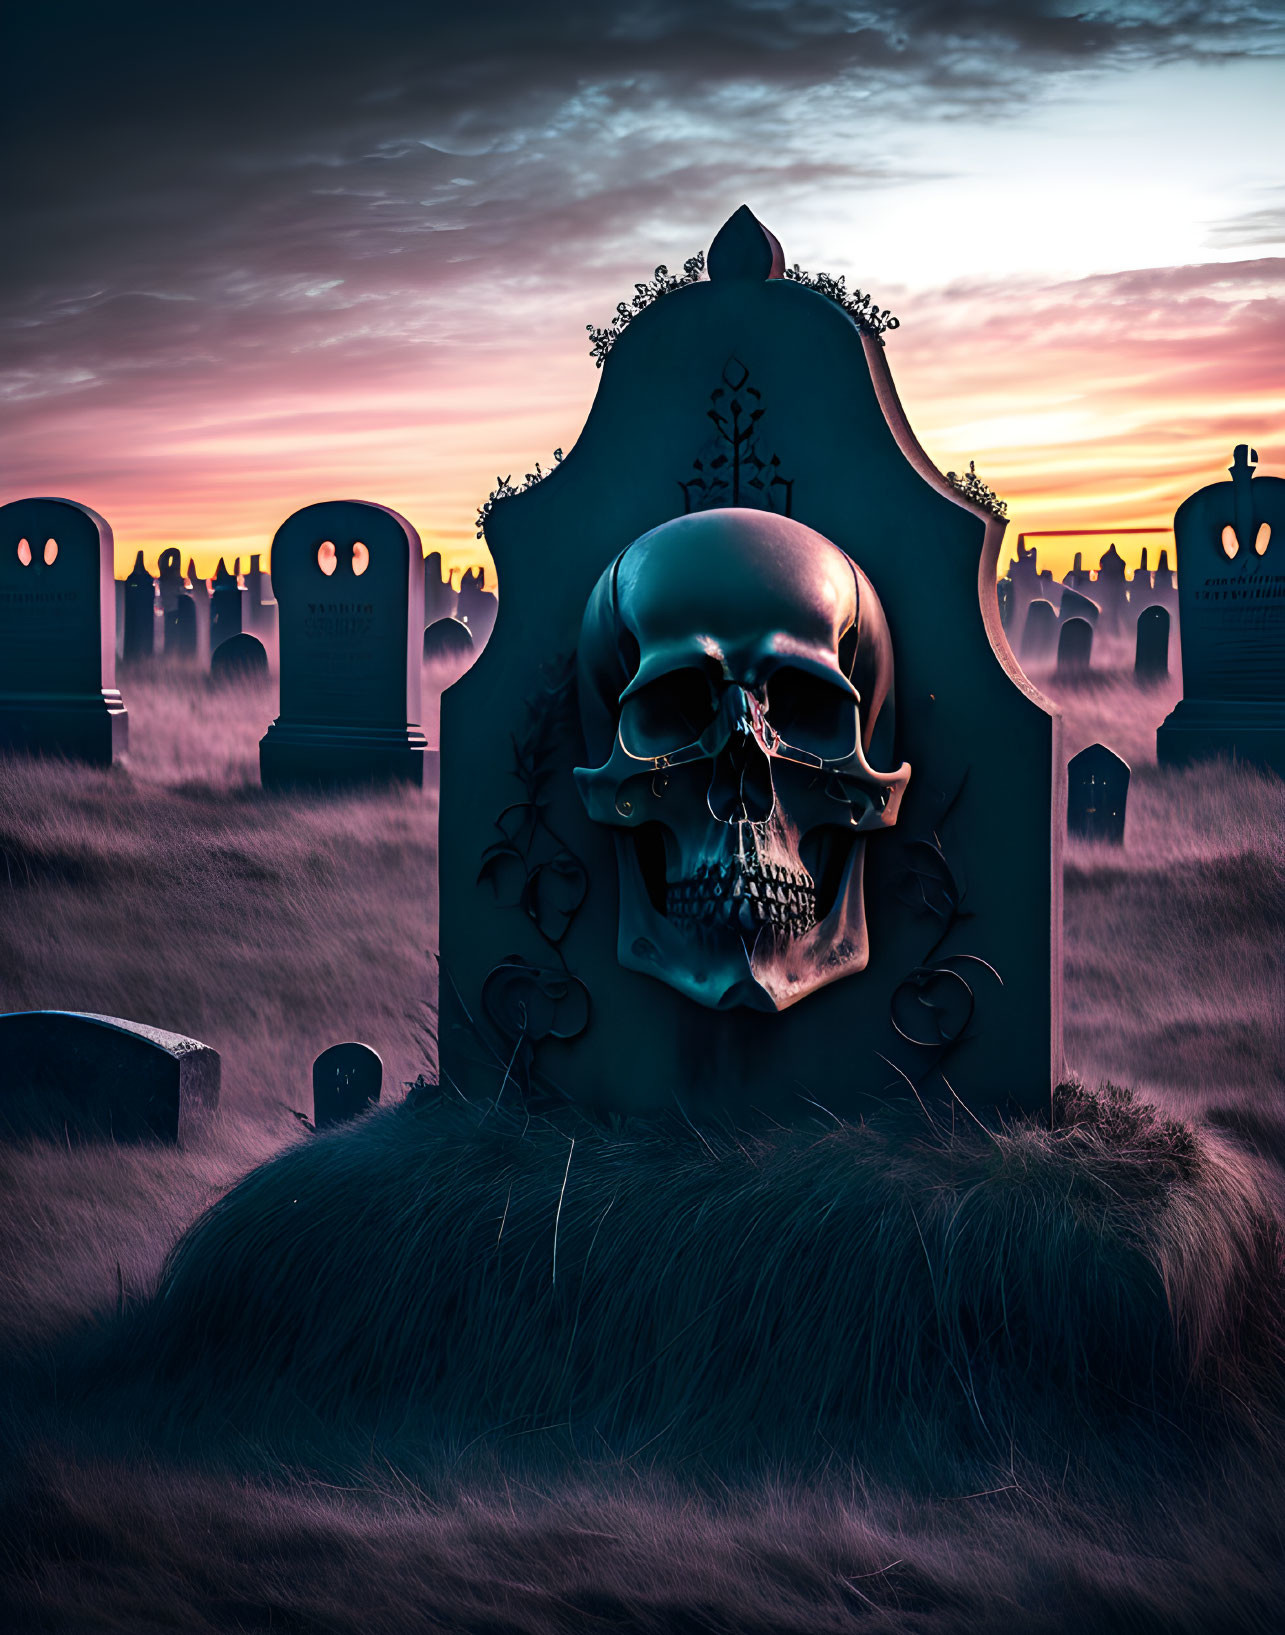 Eerie graveyard scene with skull tombstone at dusk